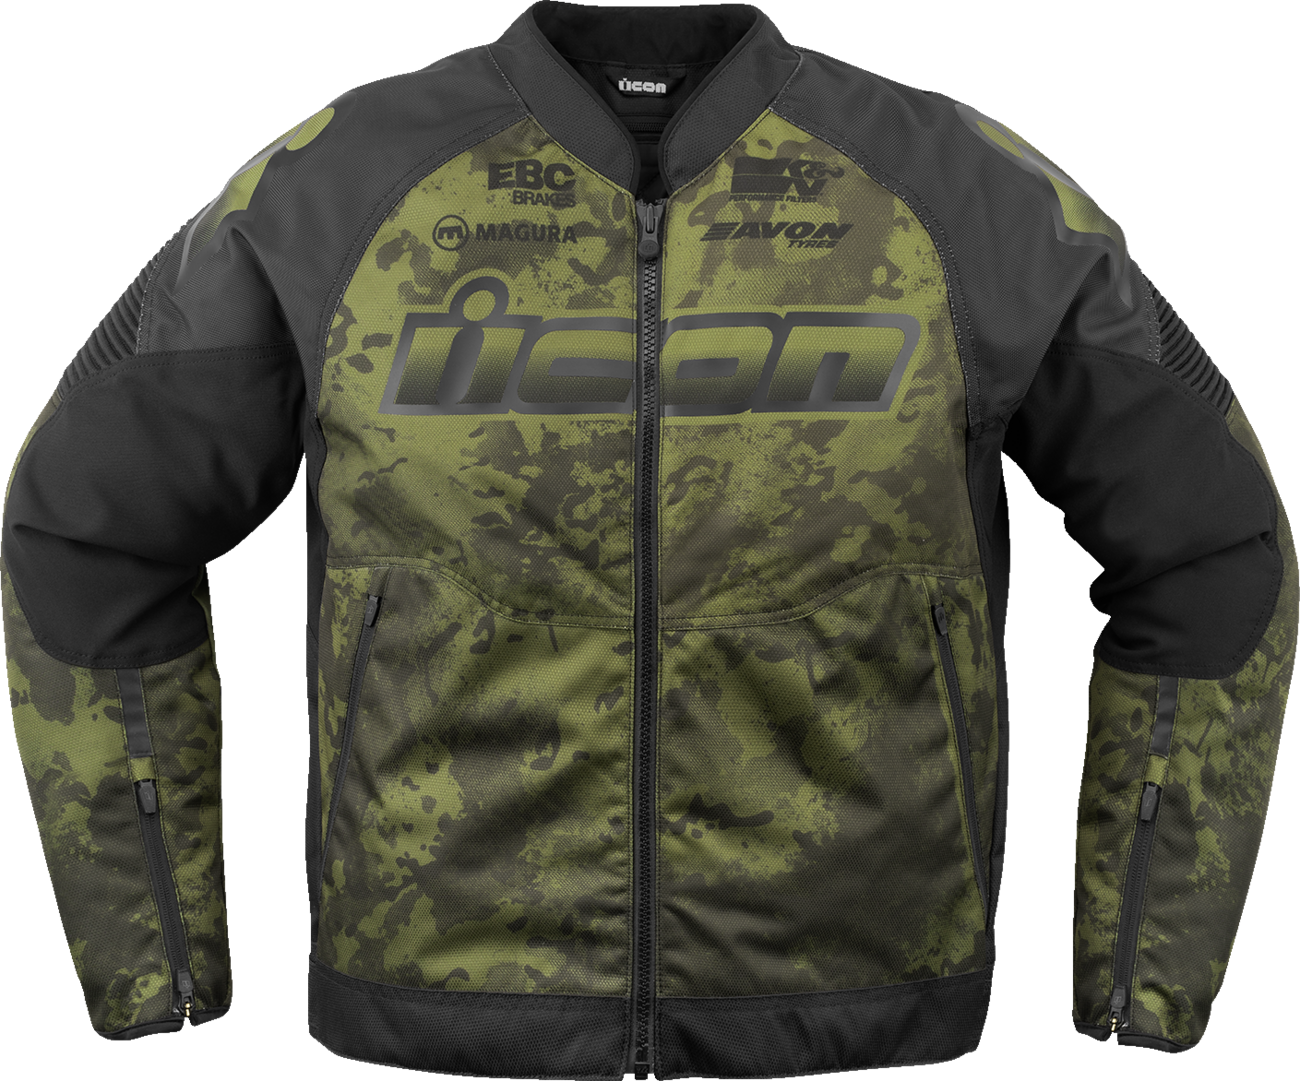 ICON Overlord3™ CE Magnacross Jacket - Green - Medium 2820-6719